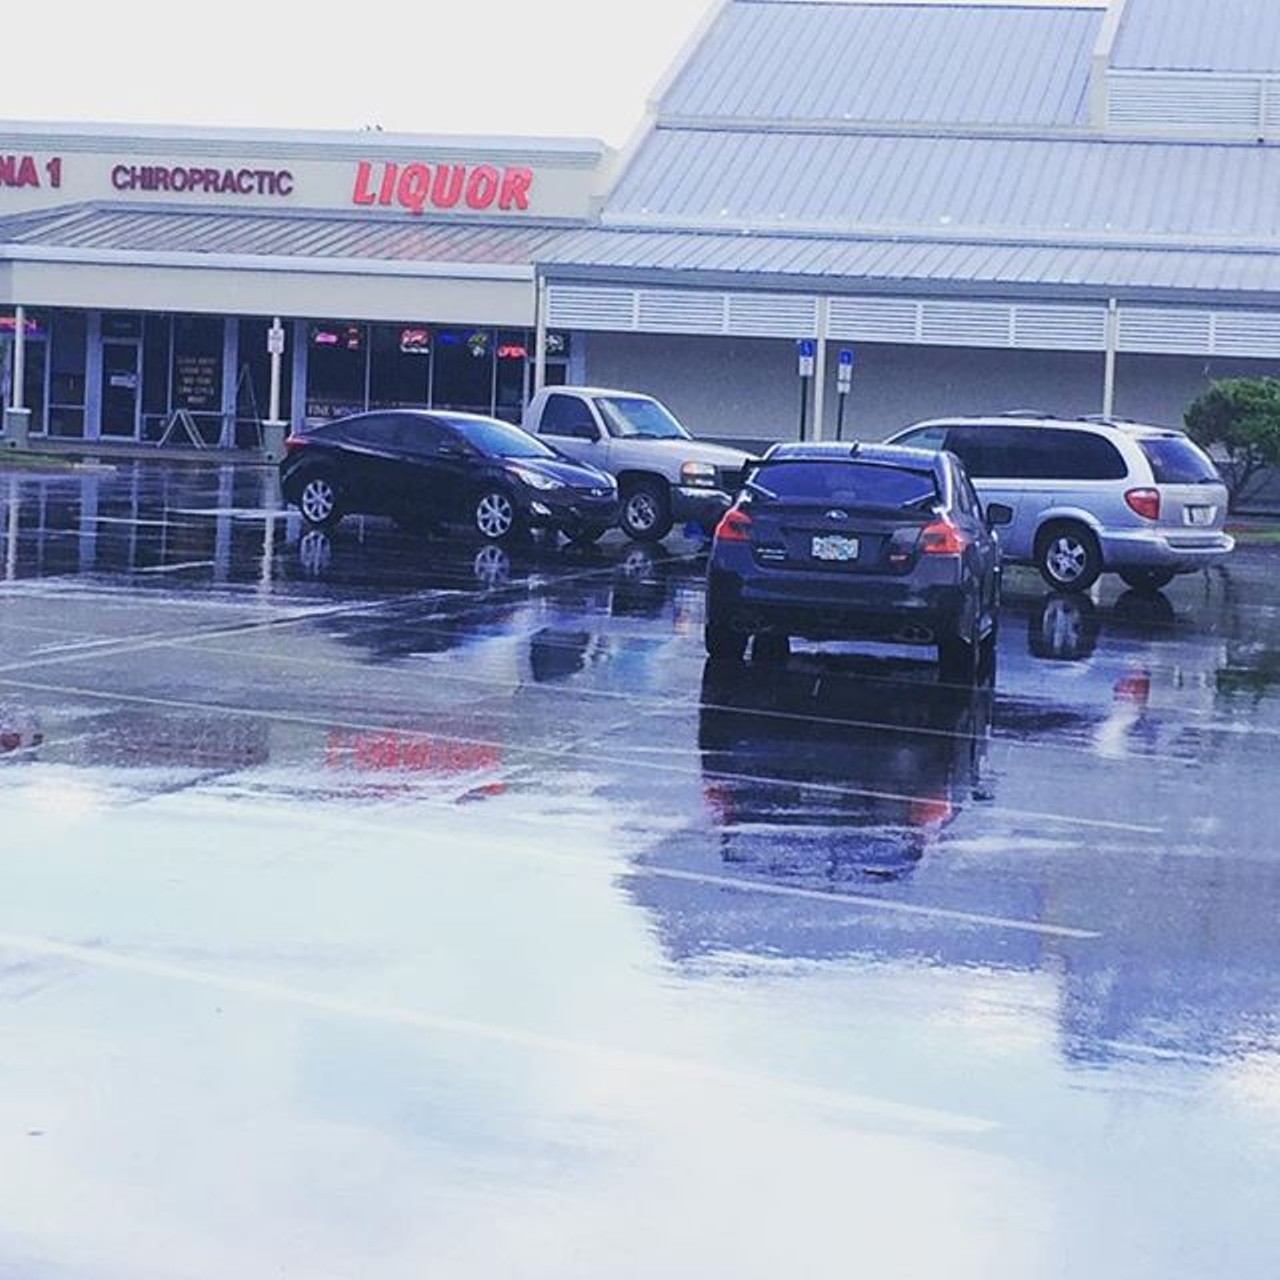 "Is it just my store?"
Photo via Instagram user brad041512